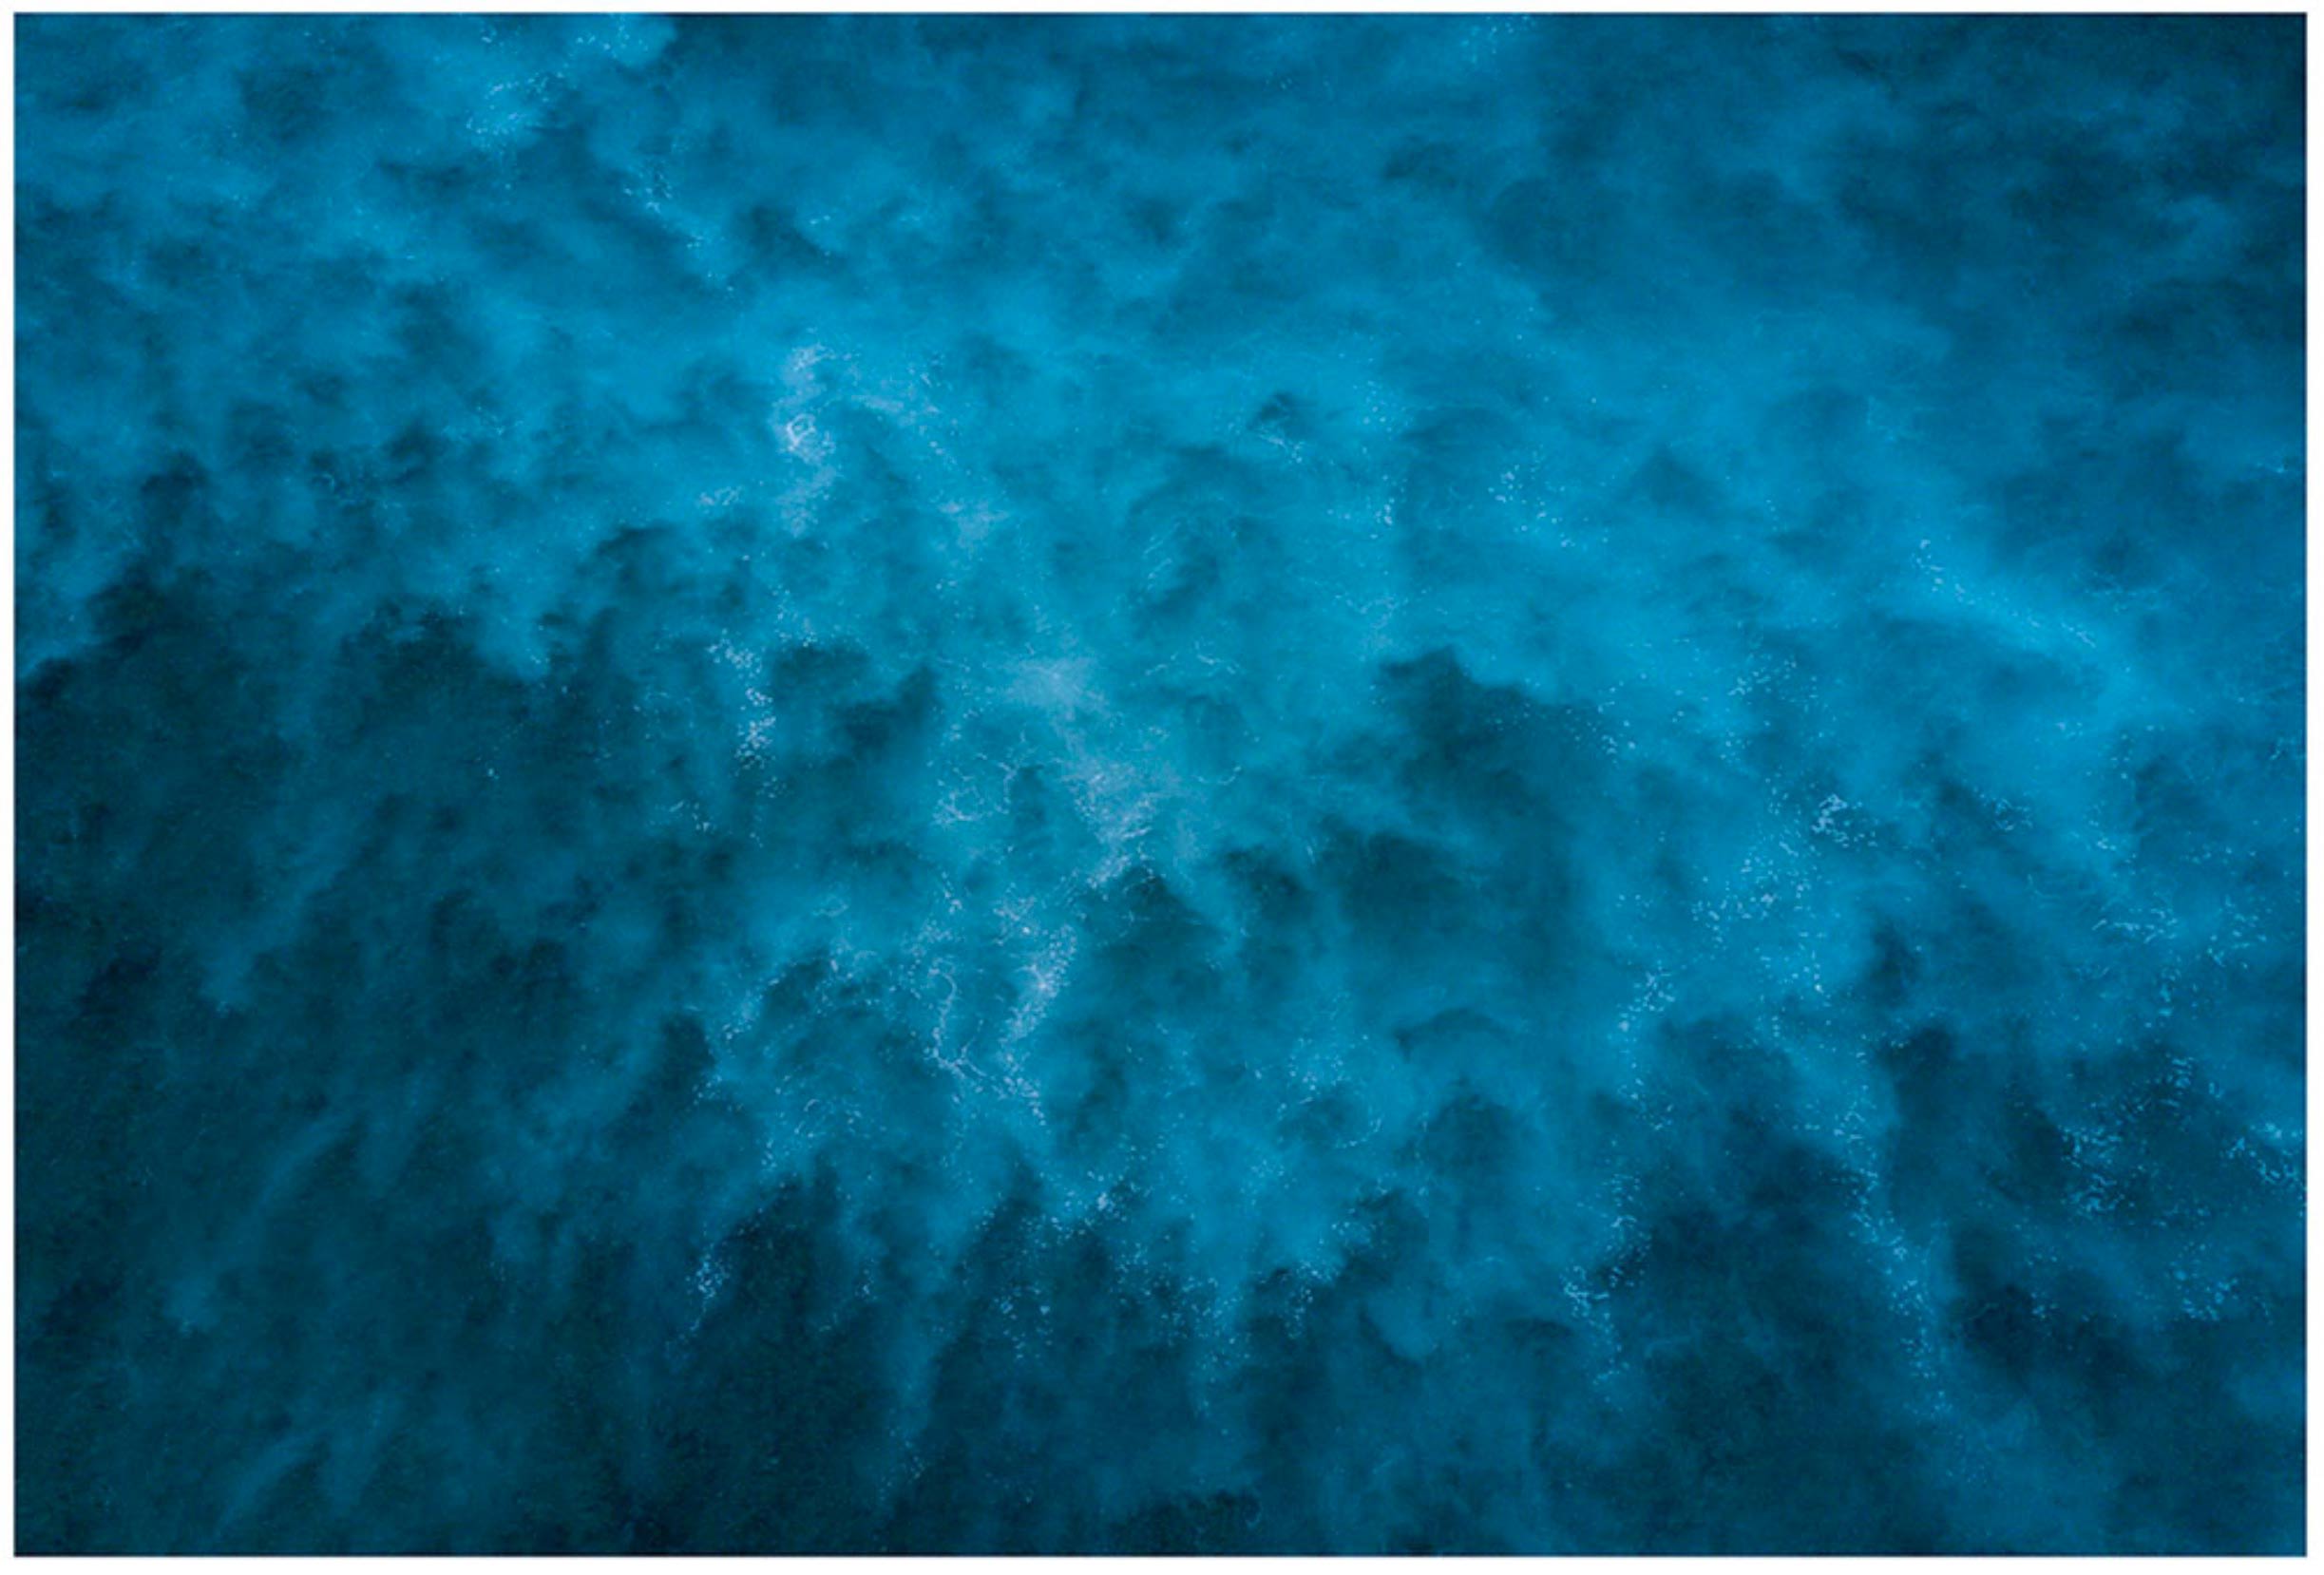 rodd-owen-ocean-surf-photography-for-sale-109.jpg